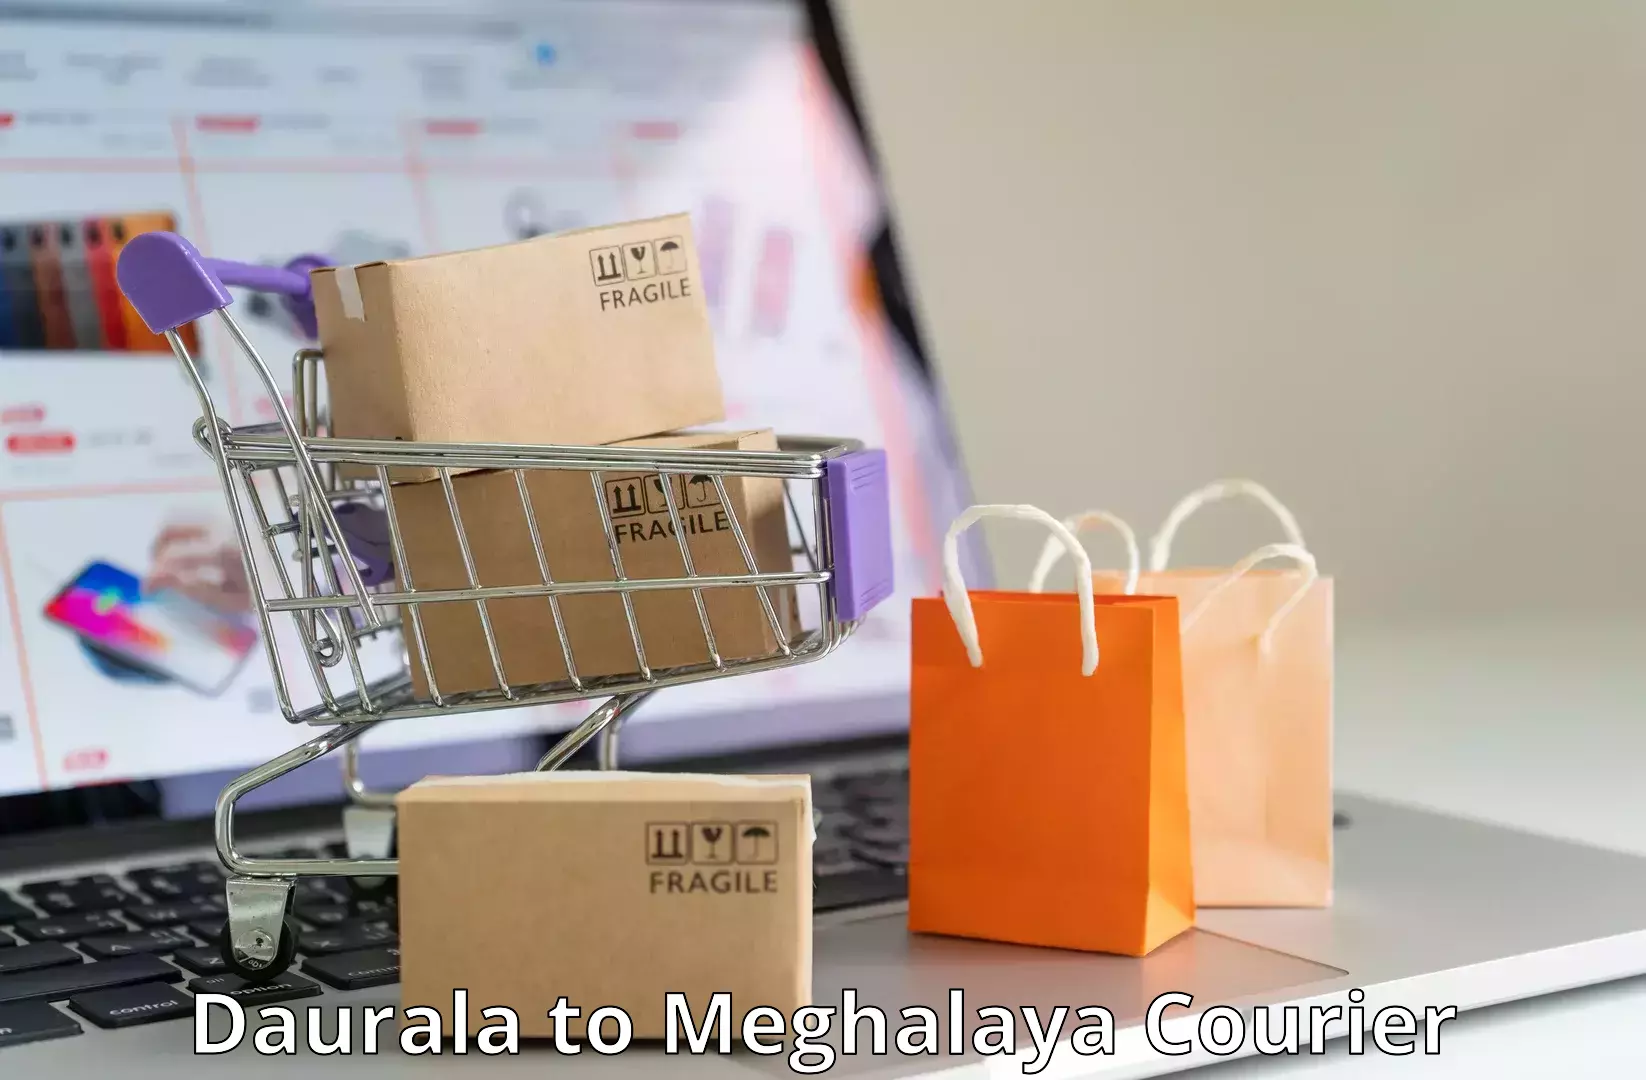 Global shipping networks Daurala to Meghalaya